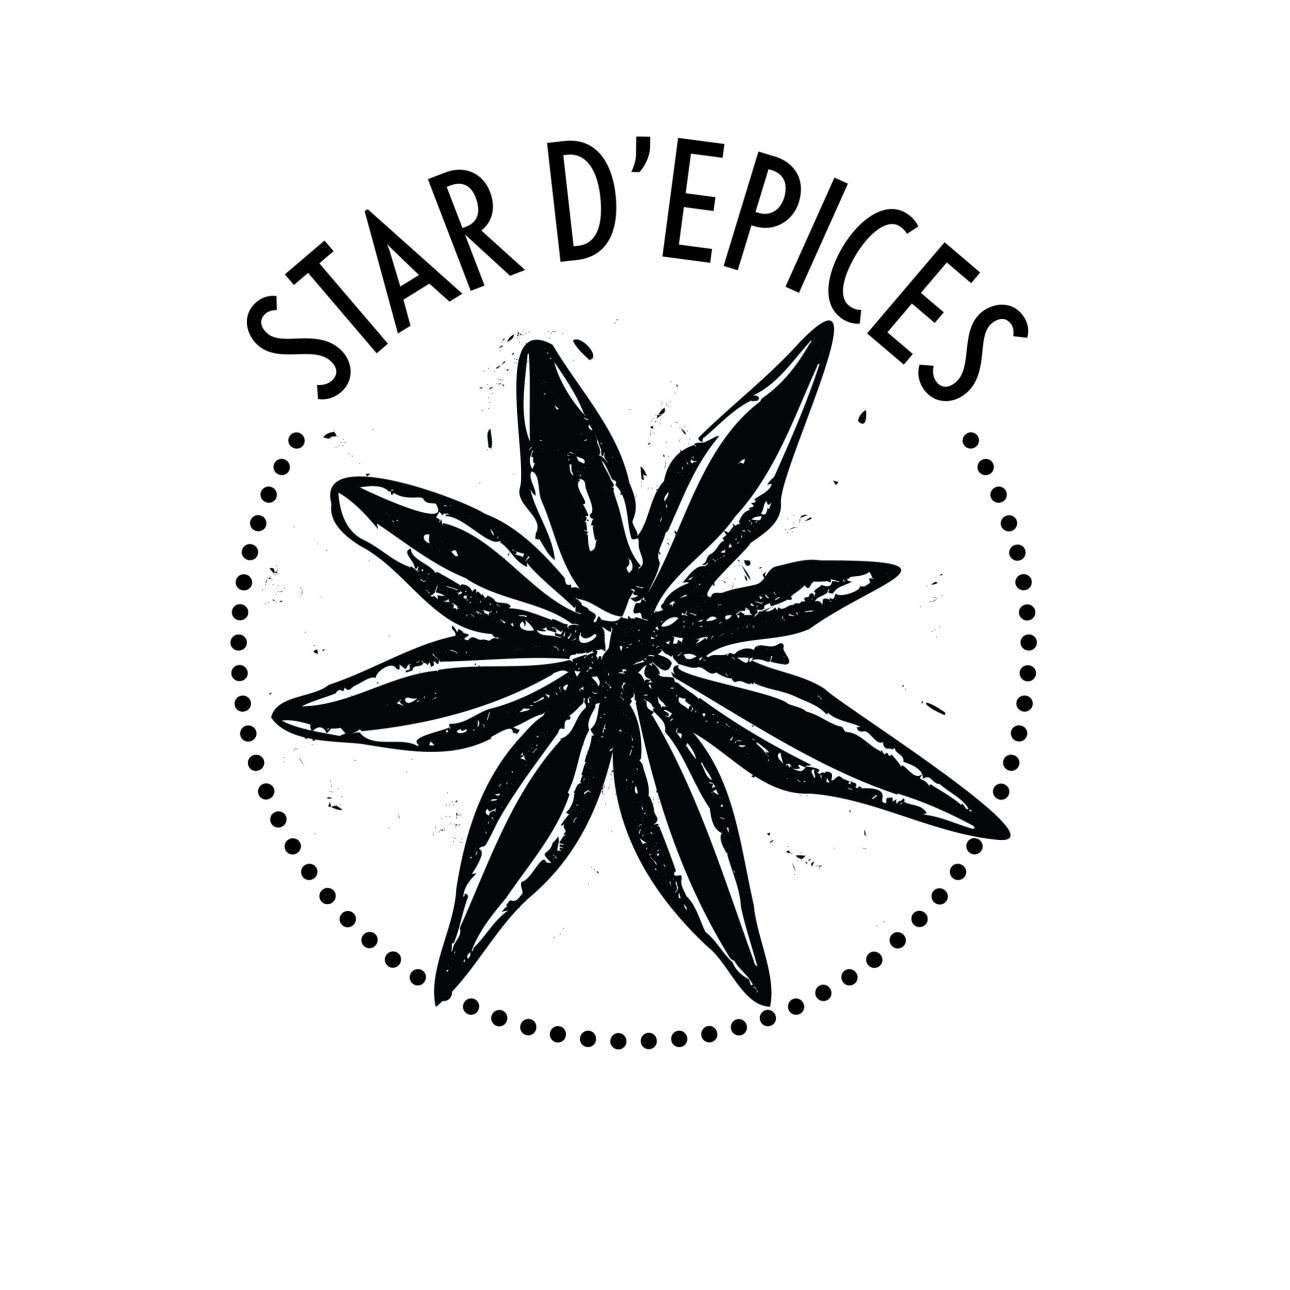 Star d'Epices